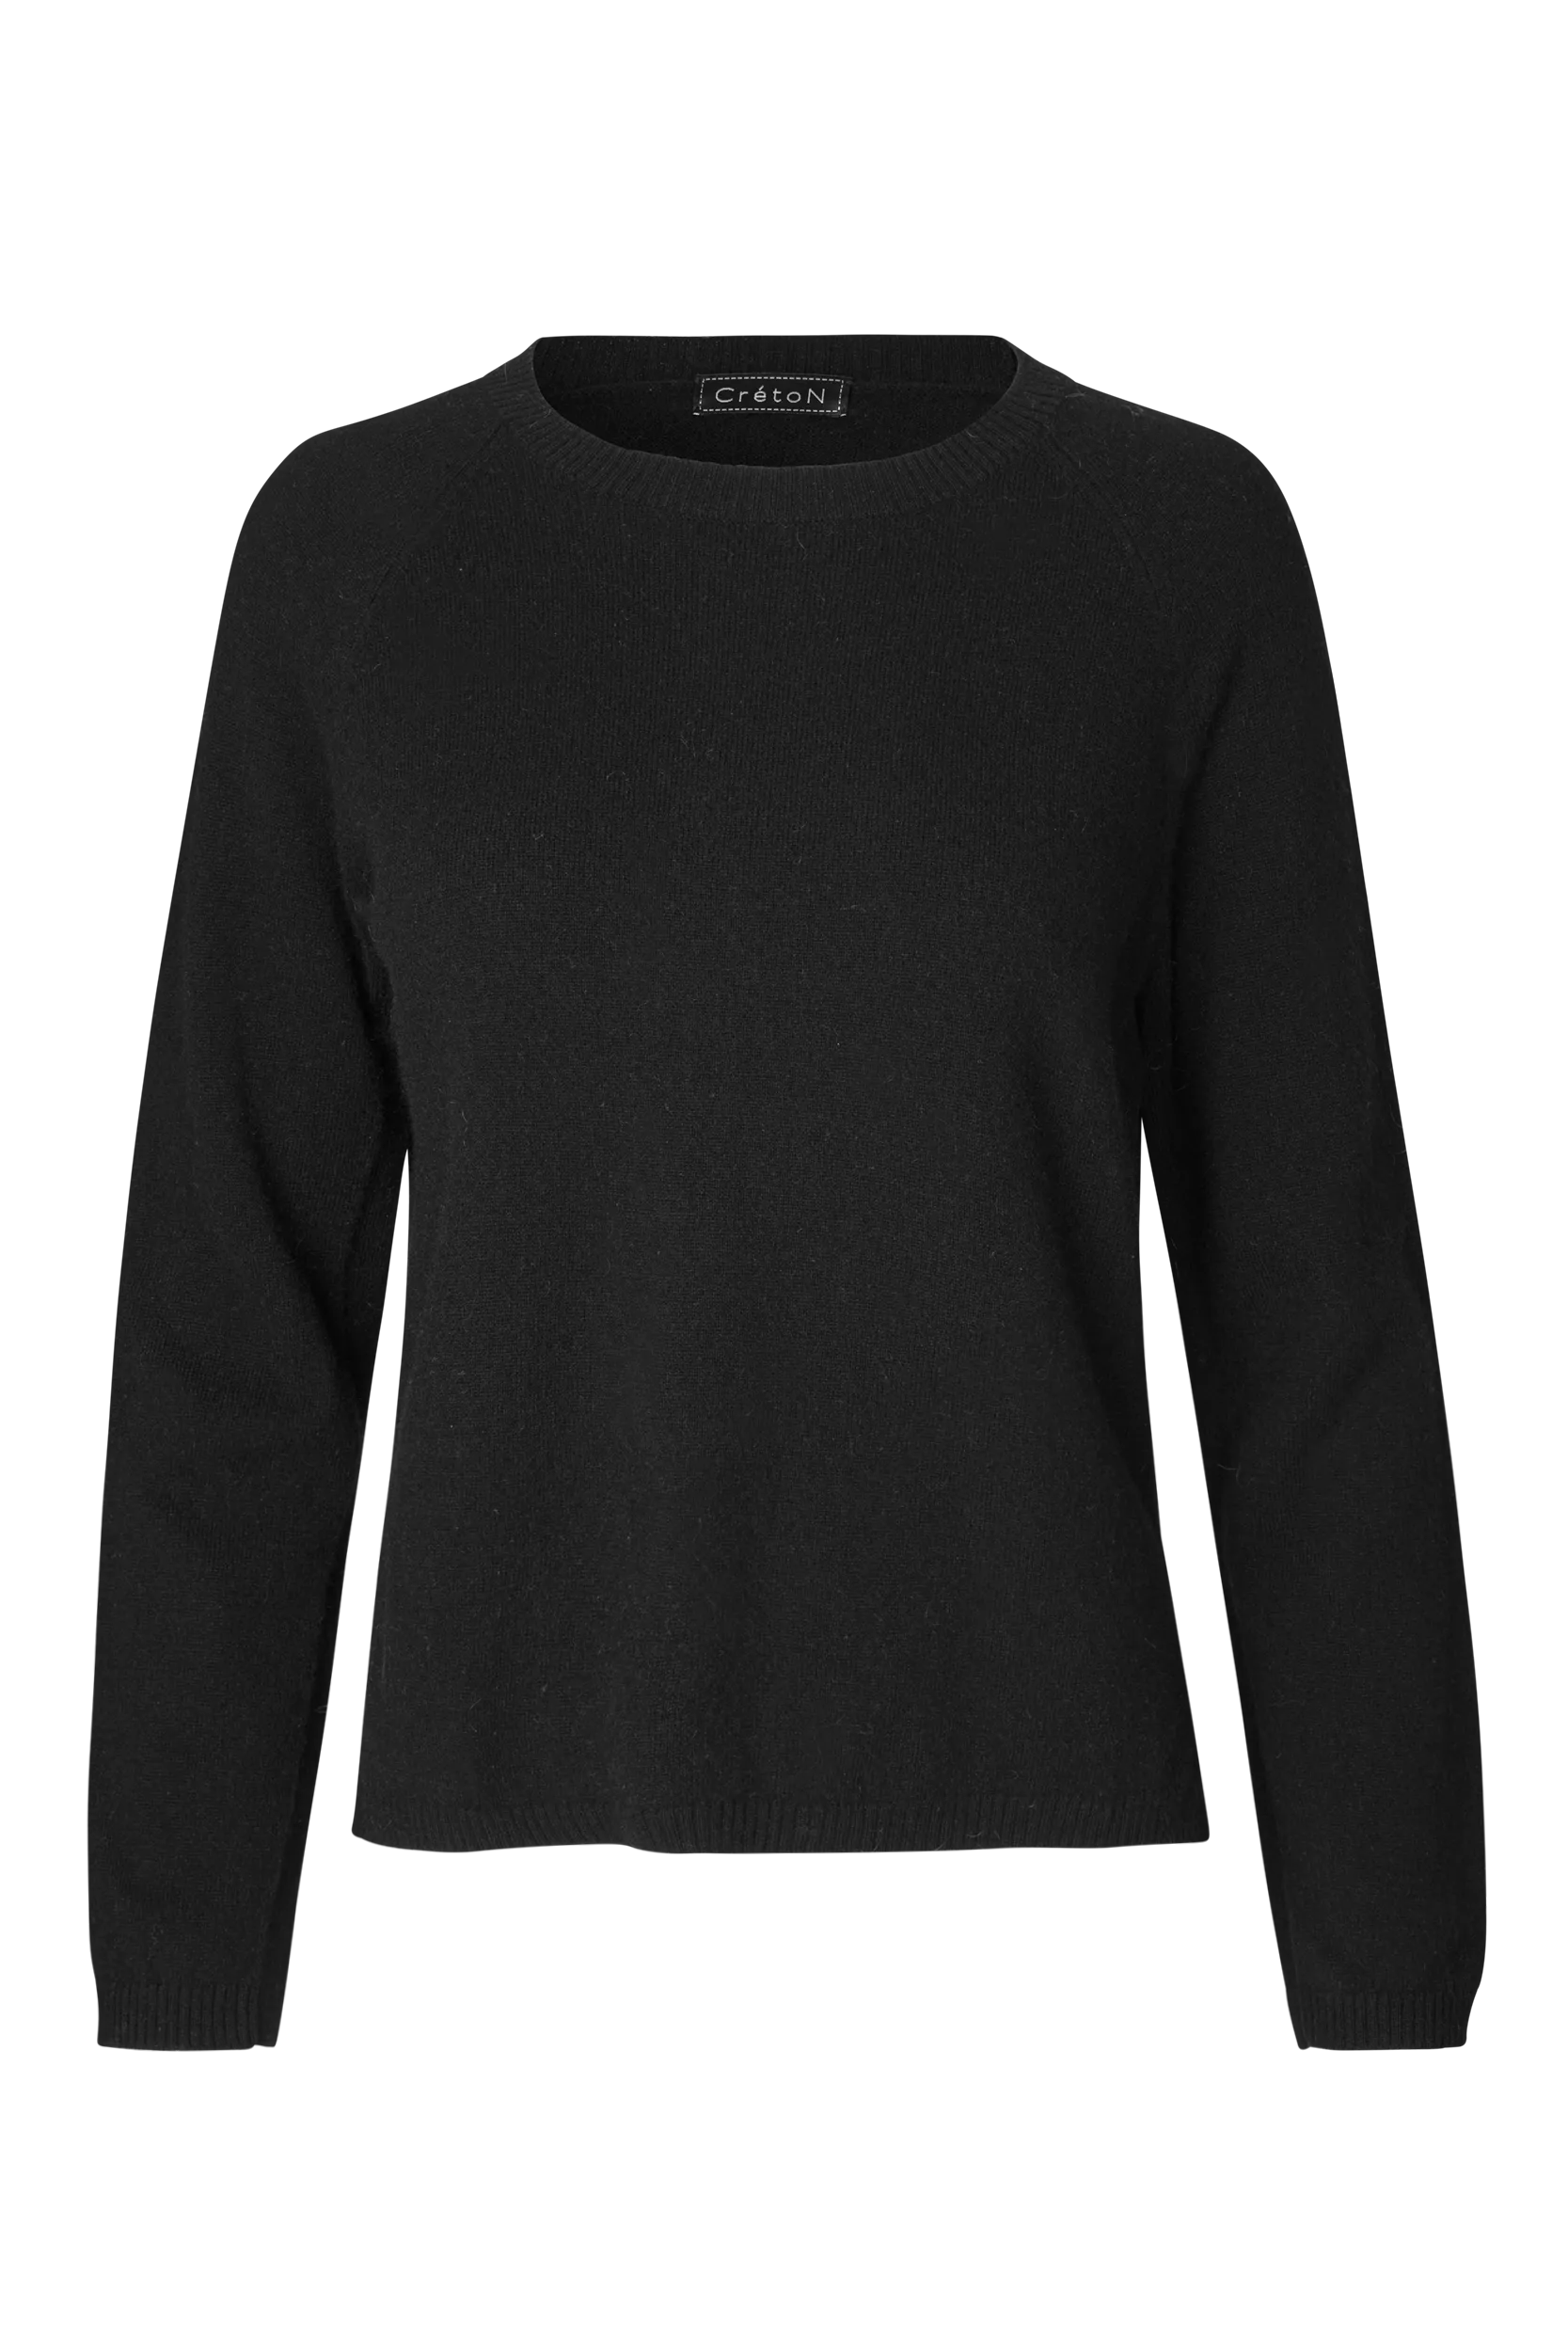 Køb CRÉTON CRLinea kashmir sweater her! | kvalitet | Hurtig